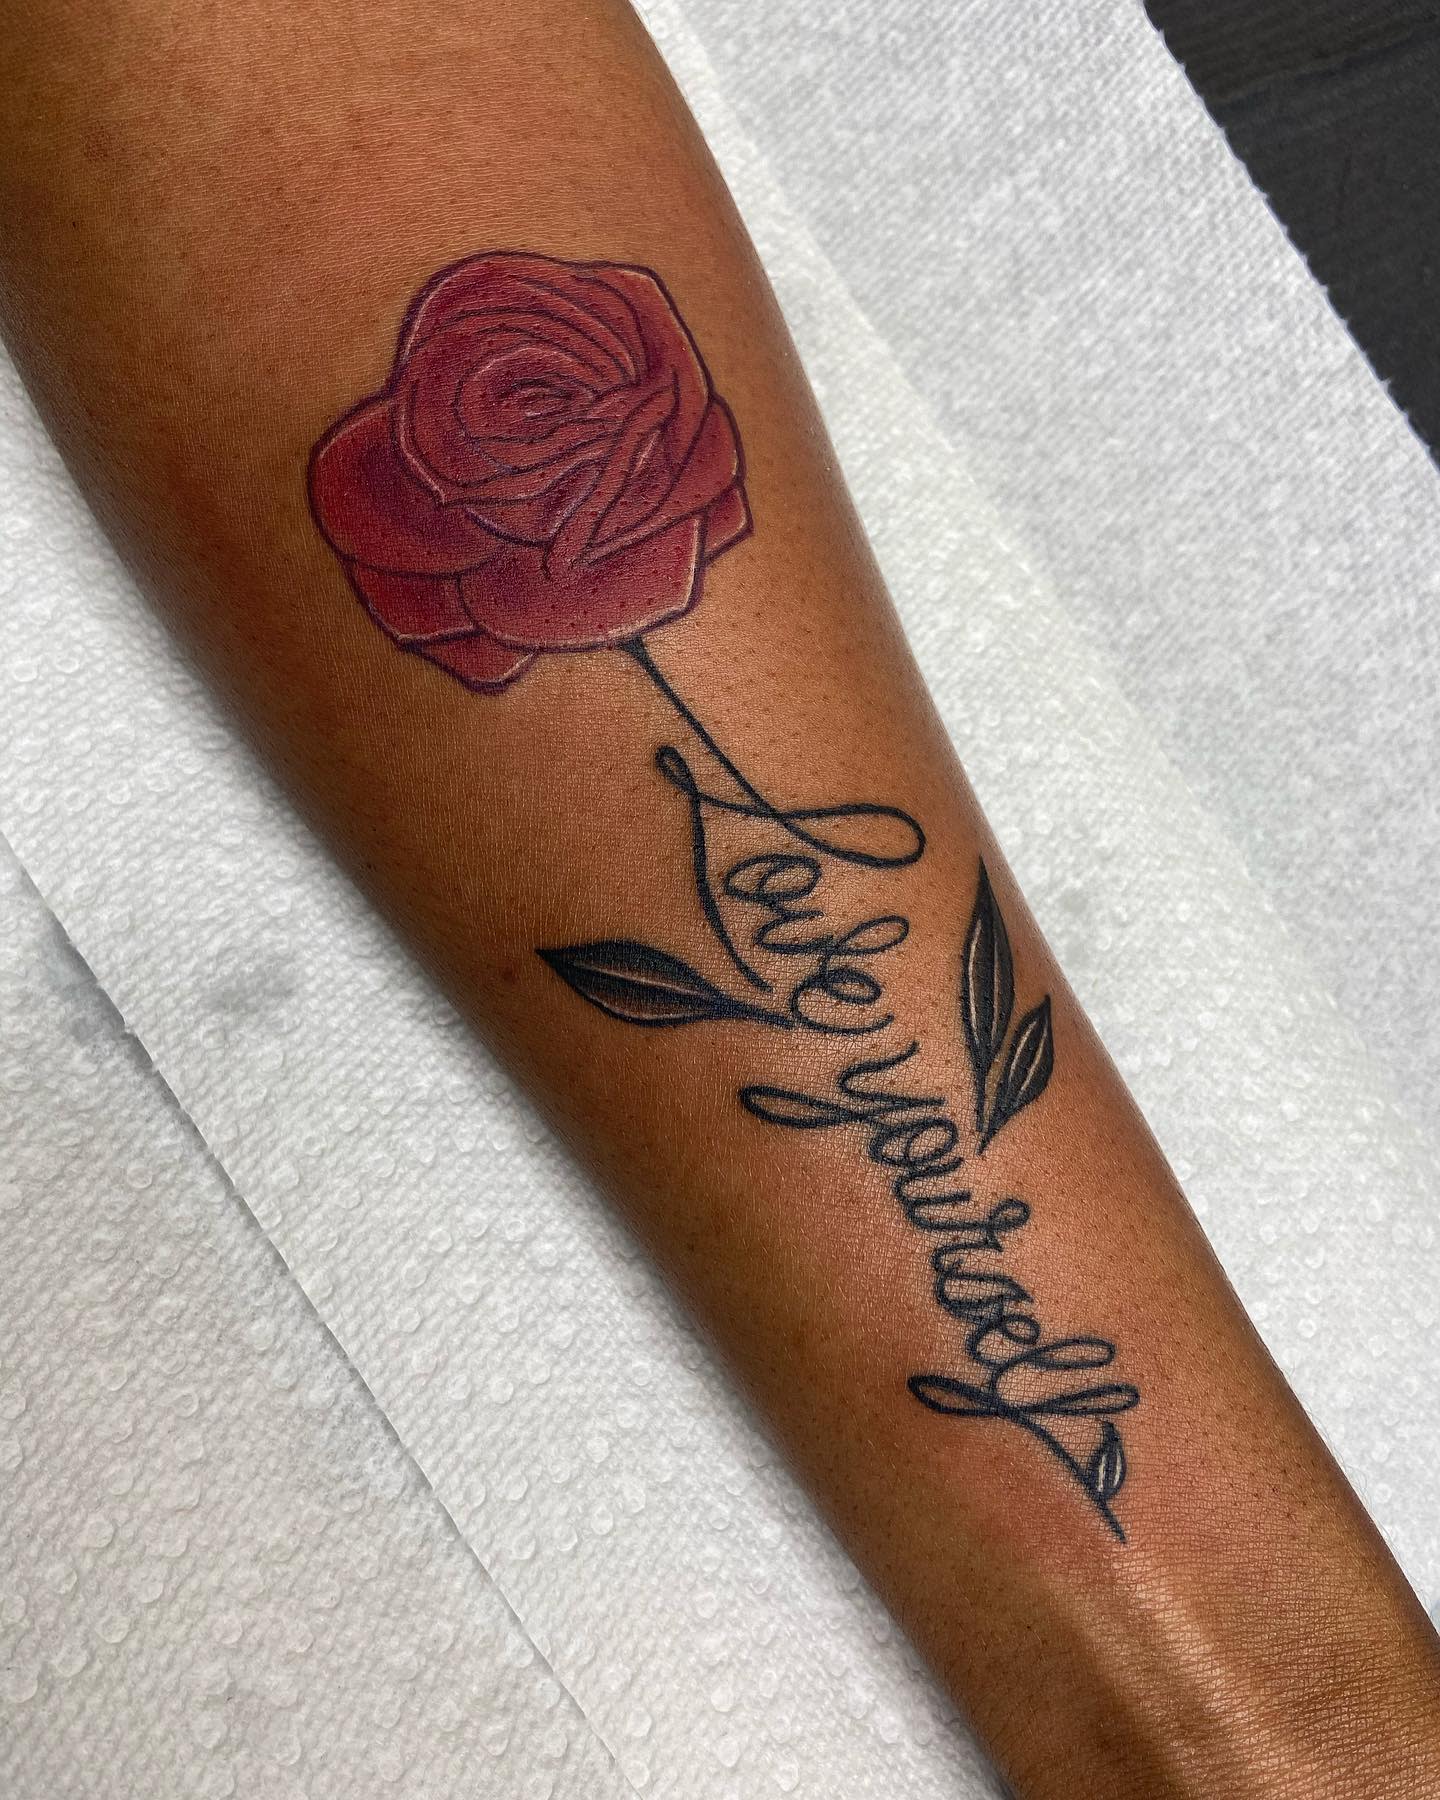 Self Love Rose Tattoo -justink_242